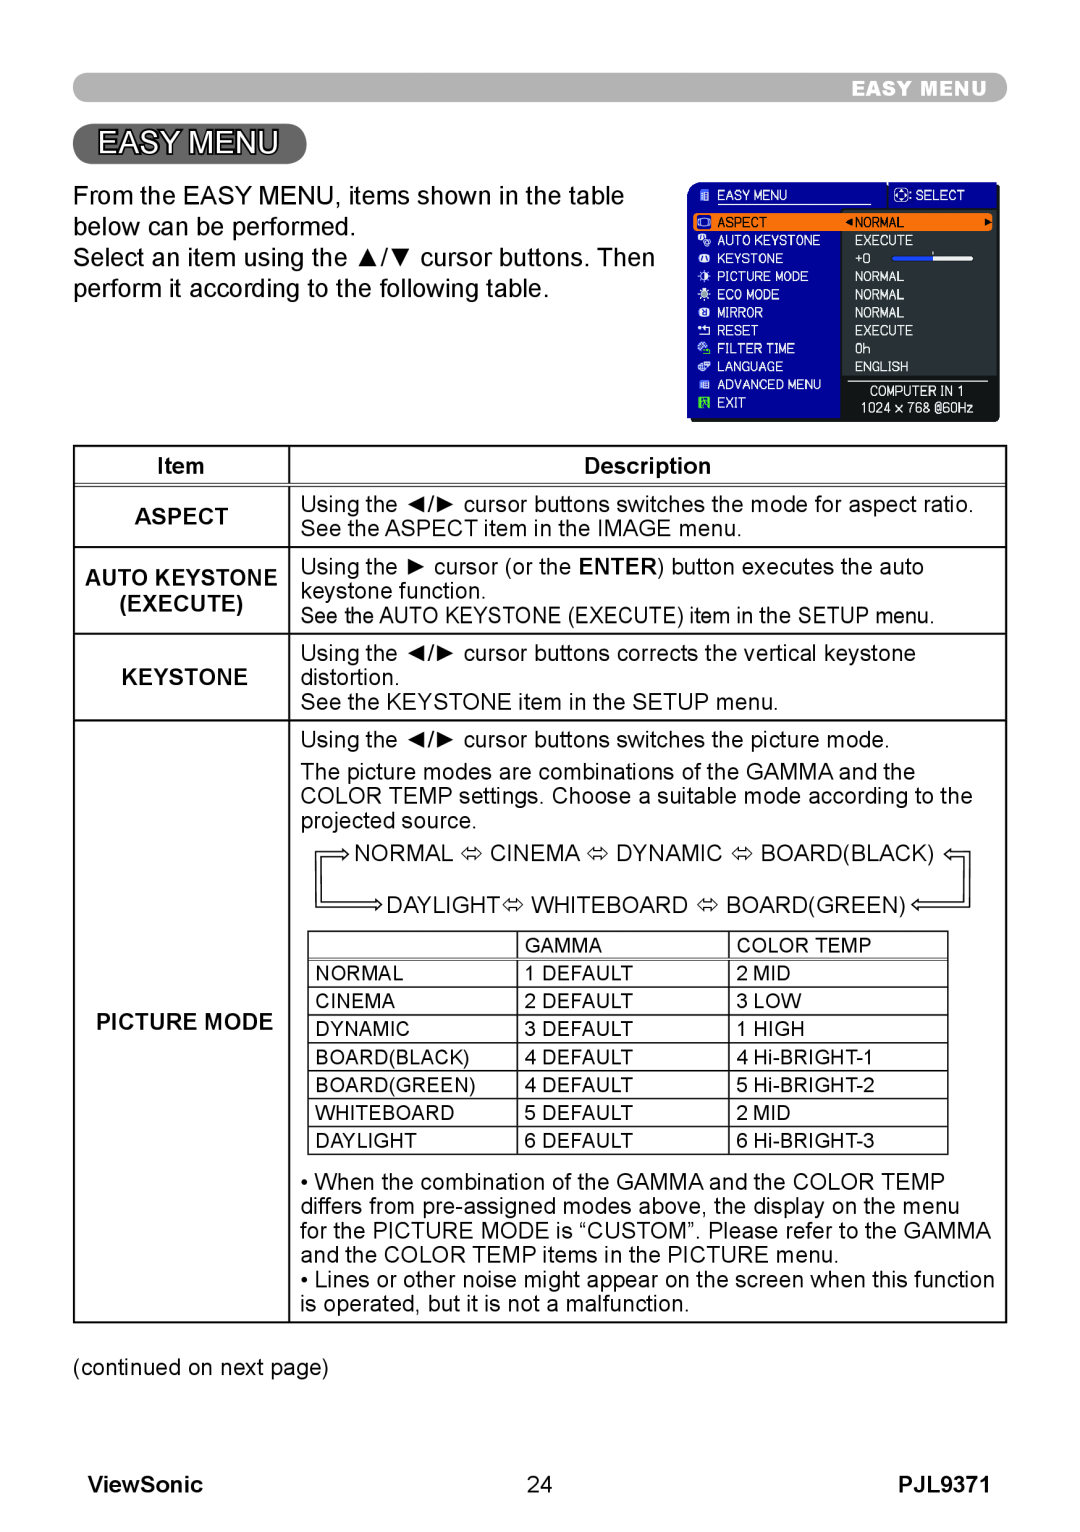 ViewSonic pjl9371 manual Easy Menu, Item, Description, Aspect, Auto Keystone, Execute, Picture Mode, ViewSonic 